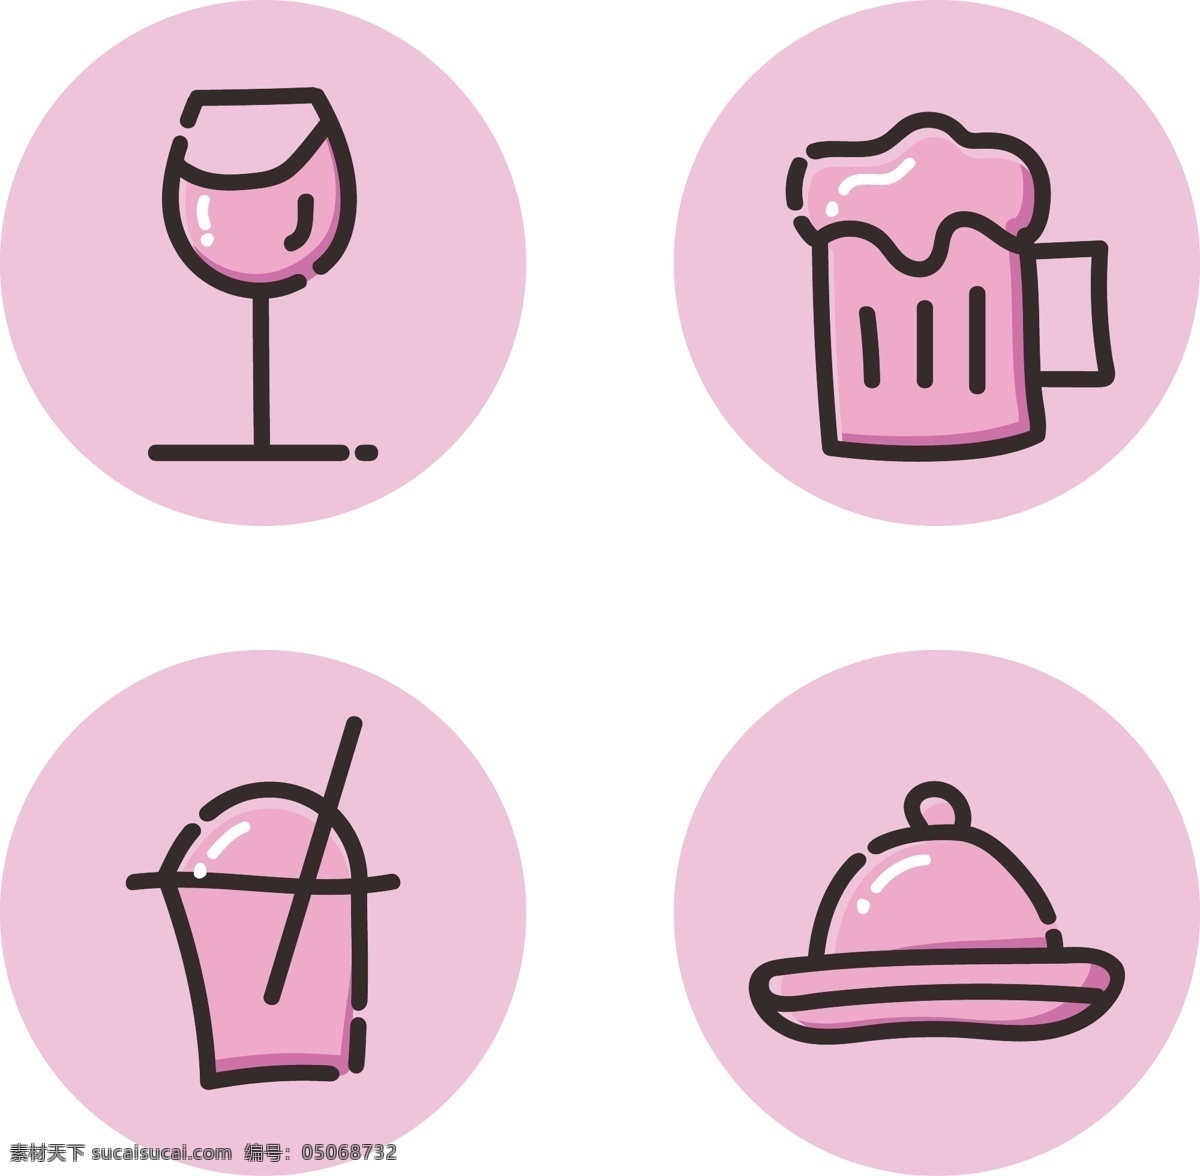 mbe 风格 粉色 小 清新 线条 餐厅 物品 图标素材 粉色图标 小清新 ui 小图标 装饰图标 mbe风格 线条素材 可爱卡通